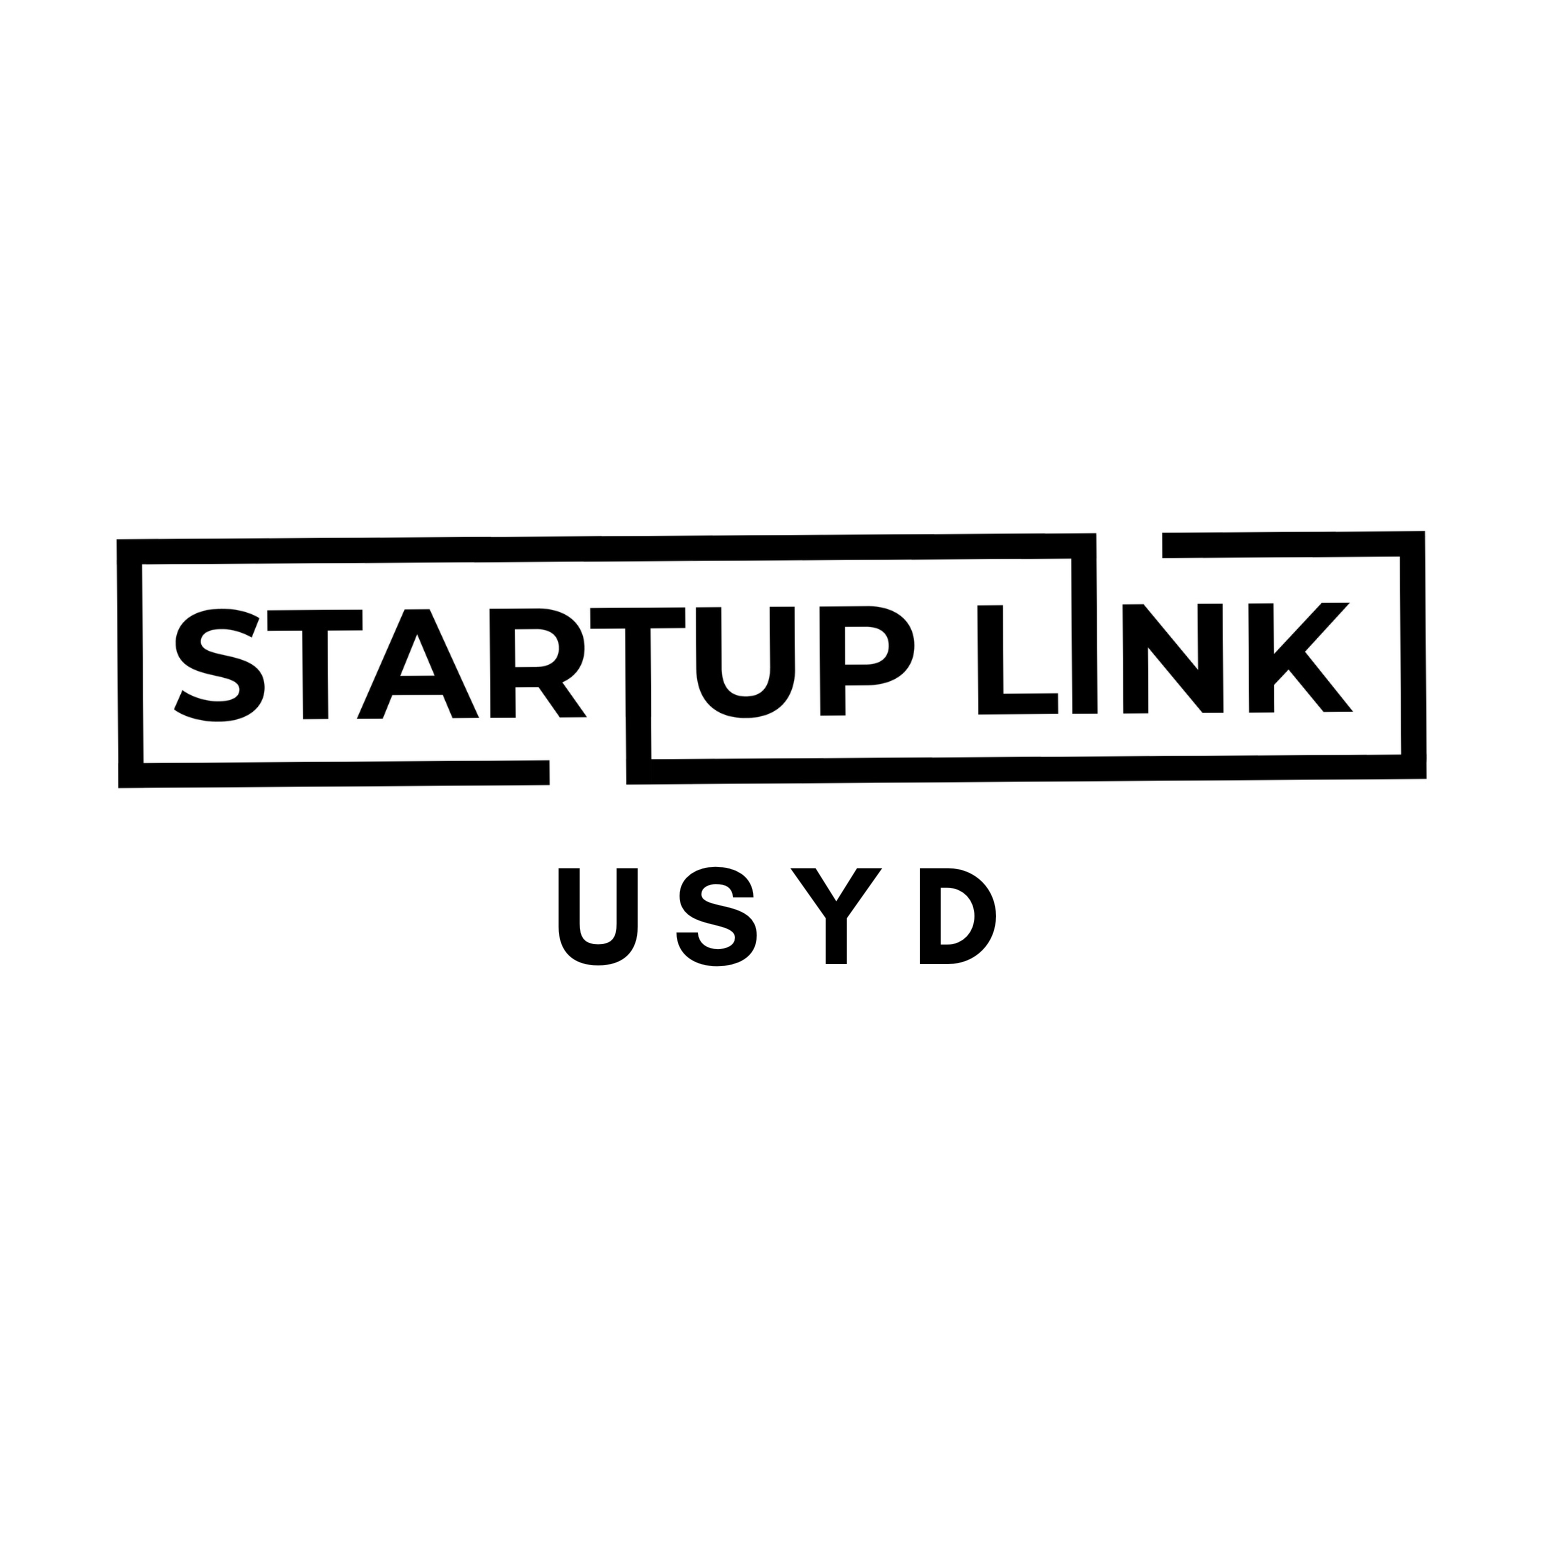 StartUp Link USYD